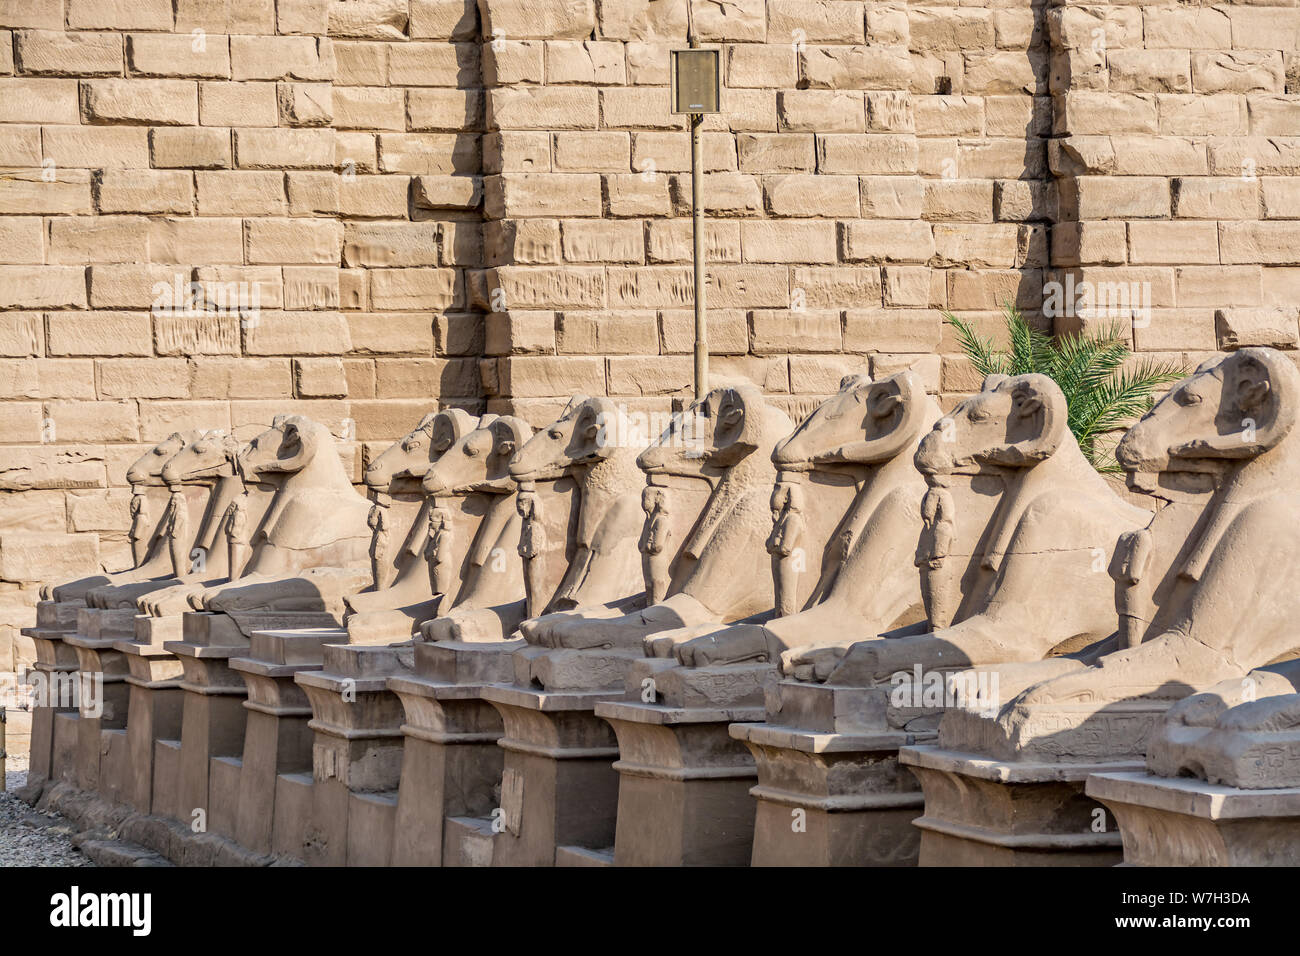 Ram statutes at the entrance to the Karnak temple, Luxor, Egypt Stock Photo